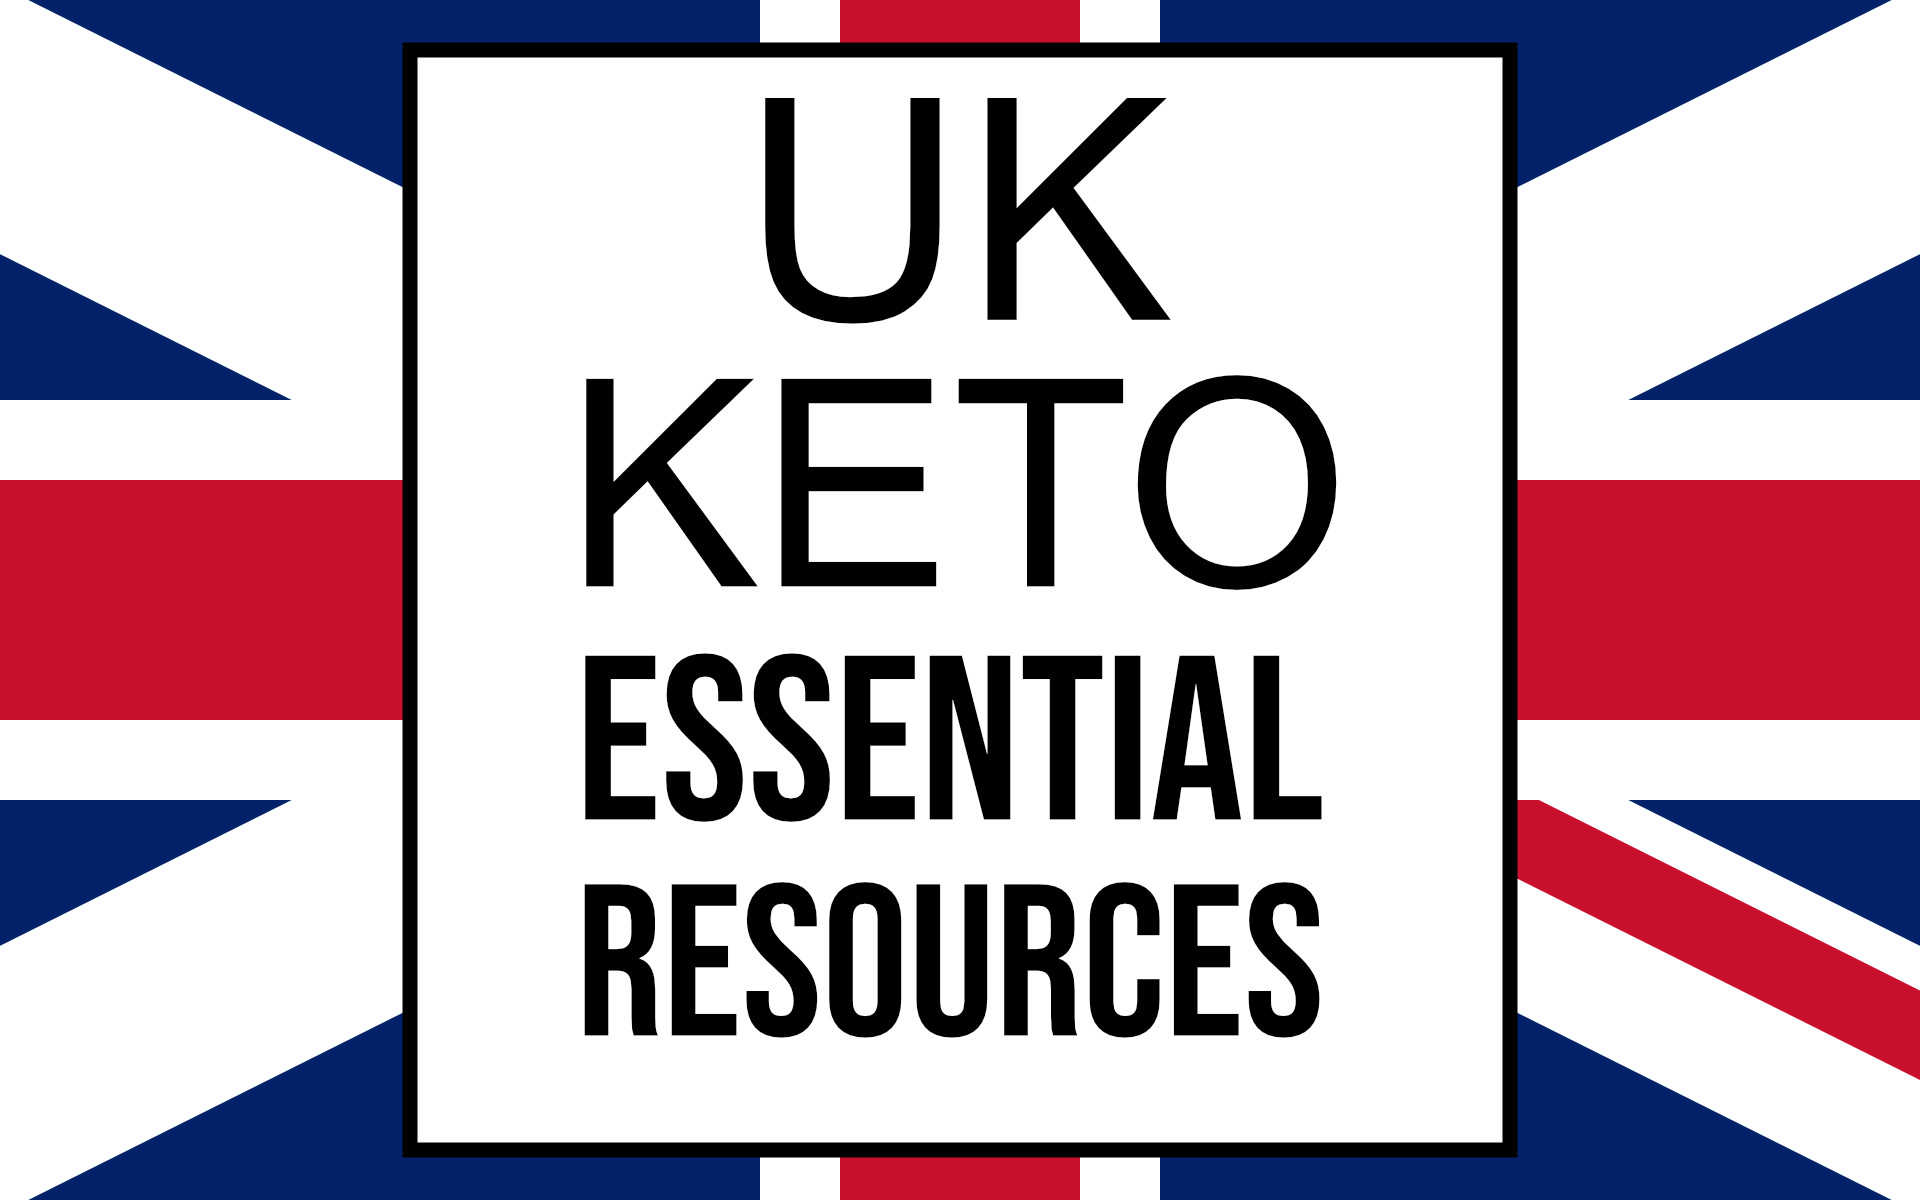 UK keto essential resources